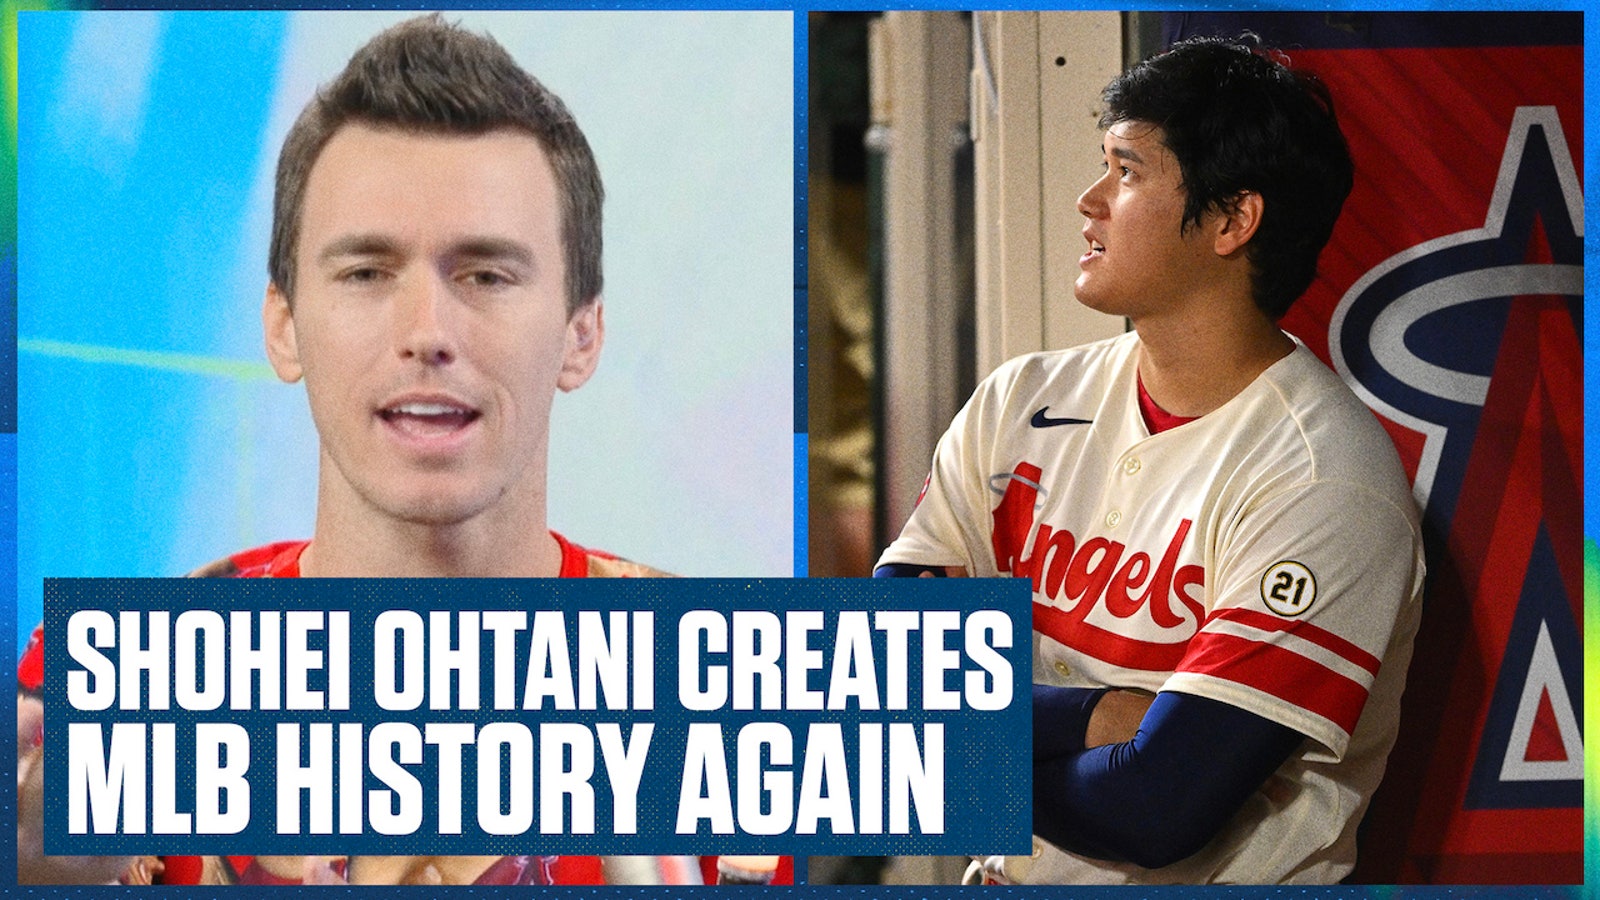 Shohei Ohtani continues to rewrite MLB history